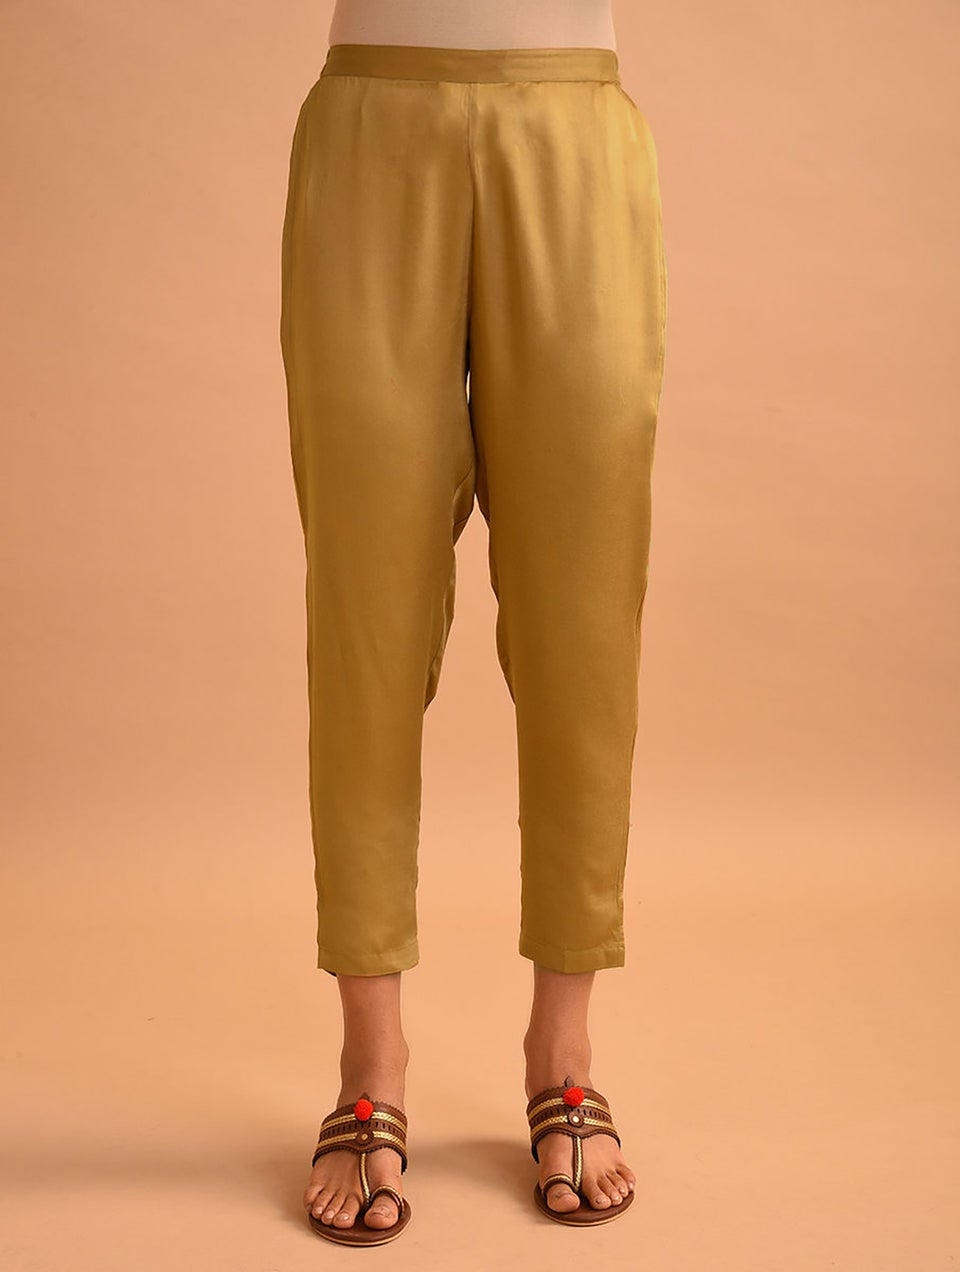 Gold Elasticated Waist Modal Pants - XS